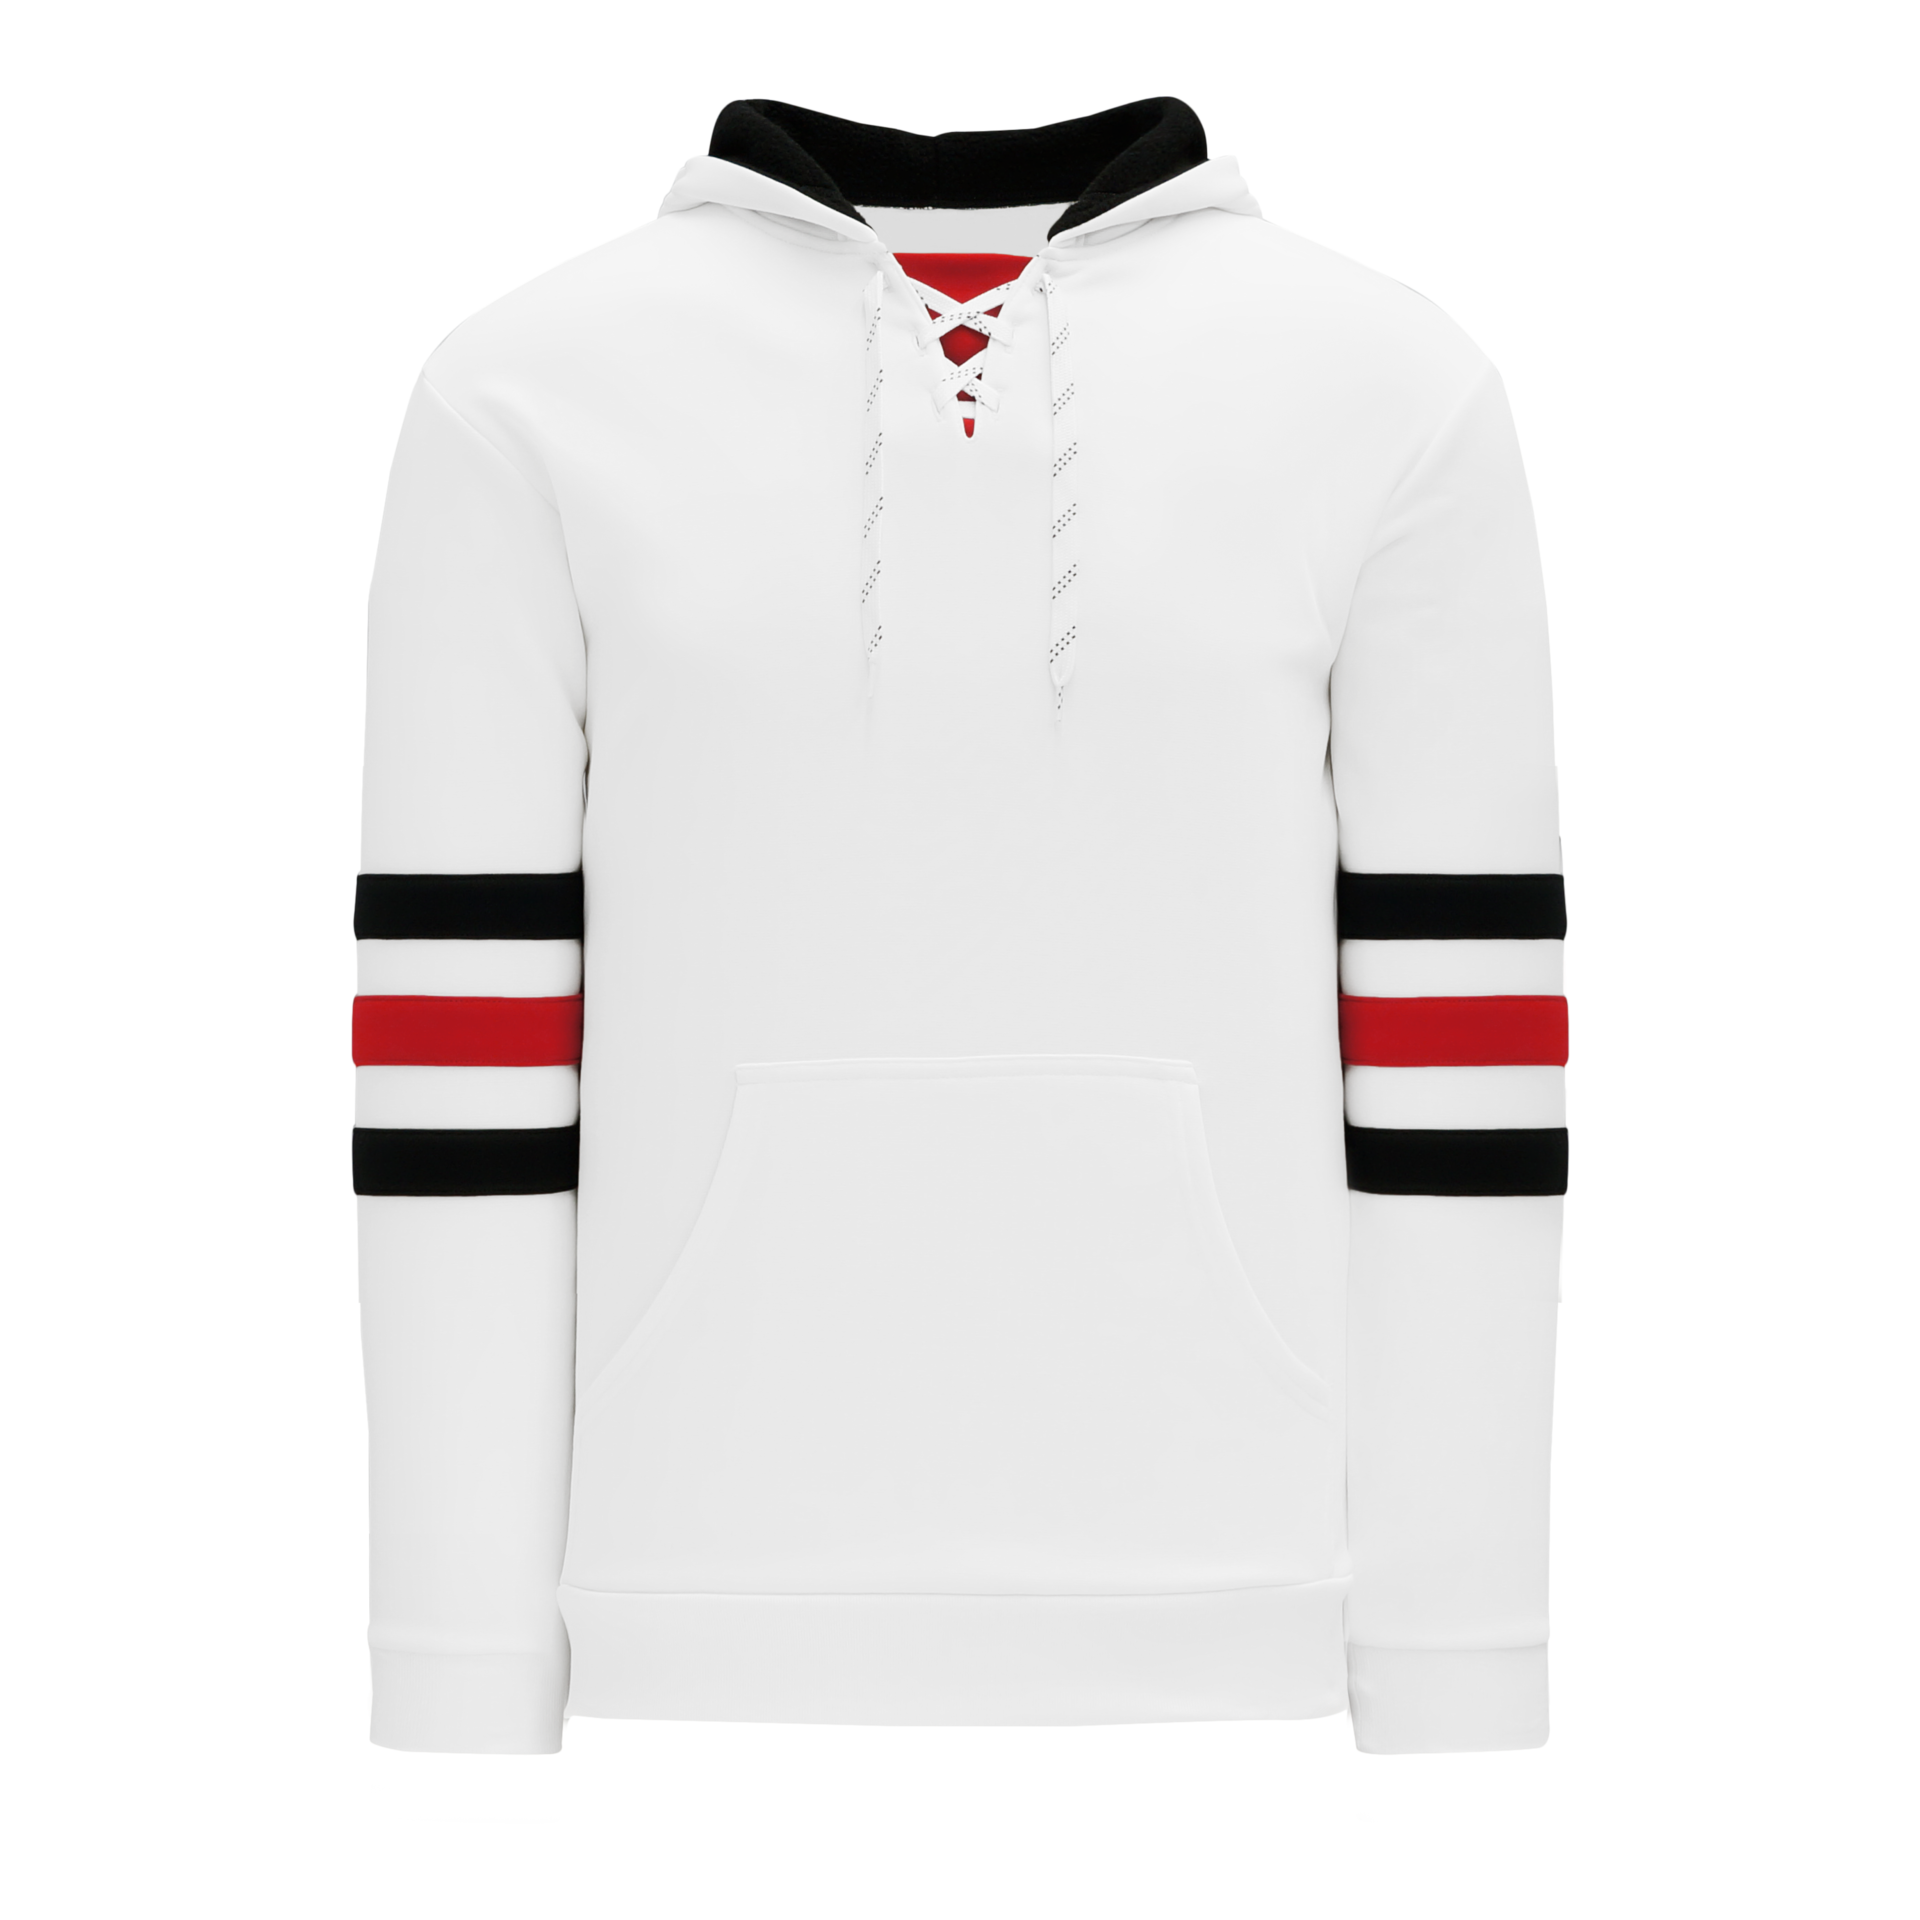 A1845-216 Navy/White Blank Hockey Lace Hoodie Sweatshirt